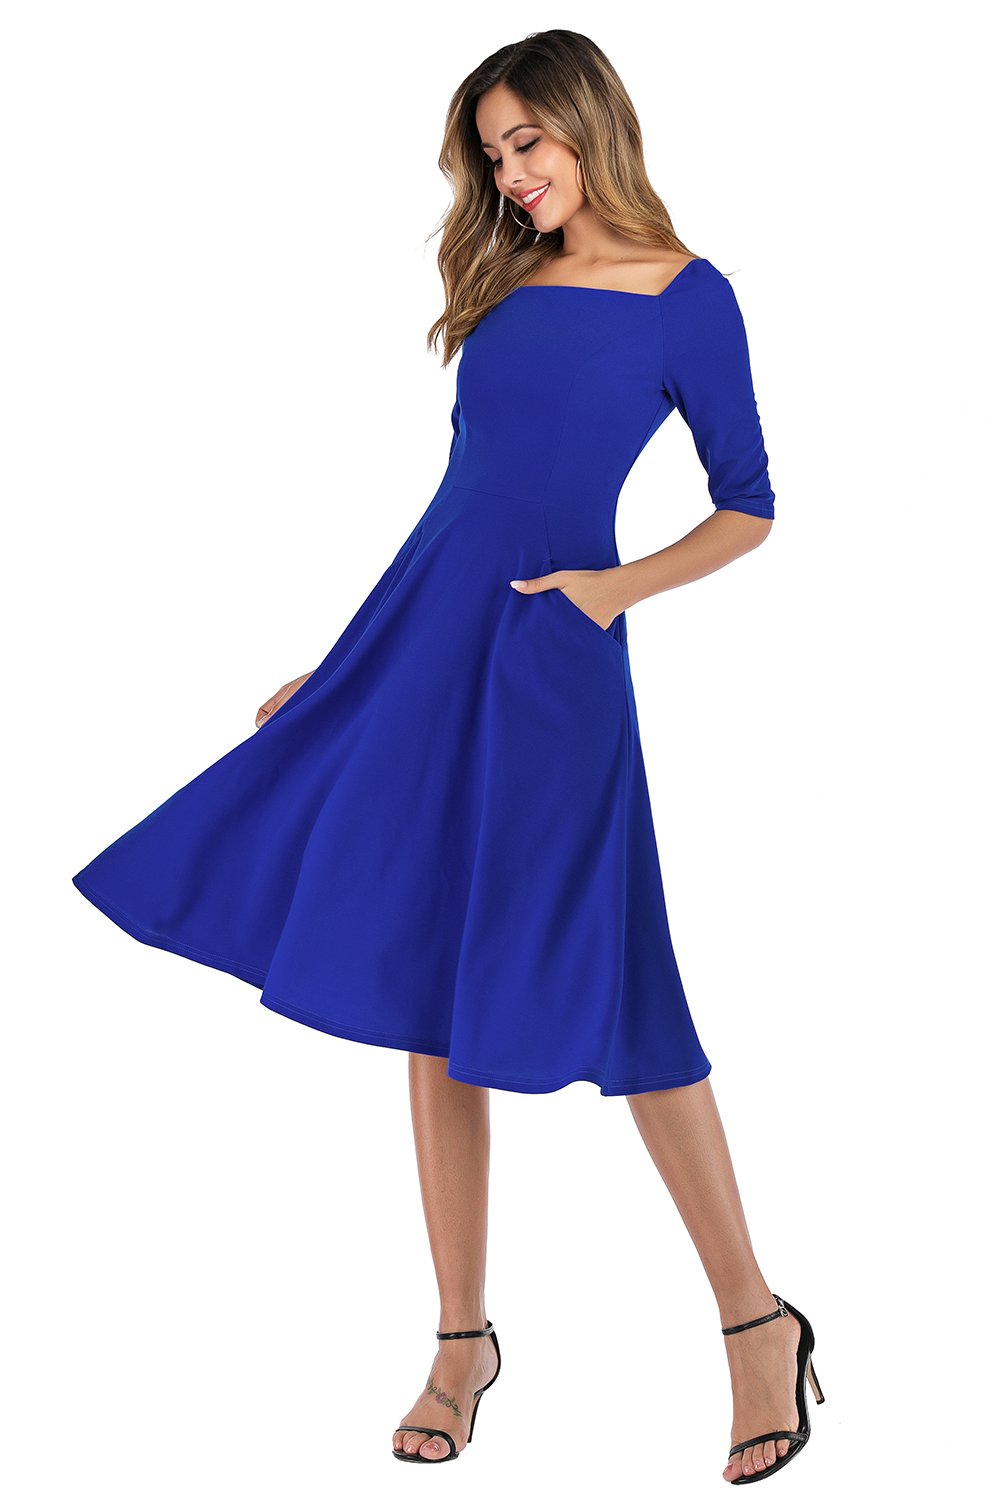 Royal Blue Dress with Pockets